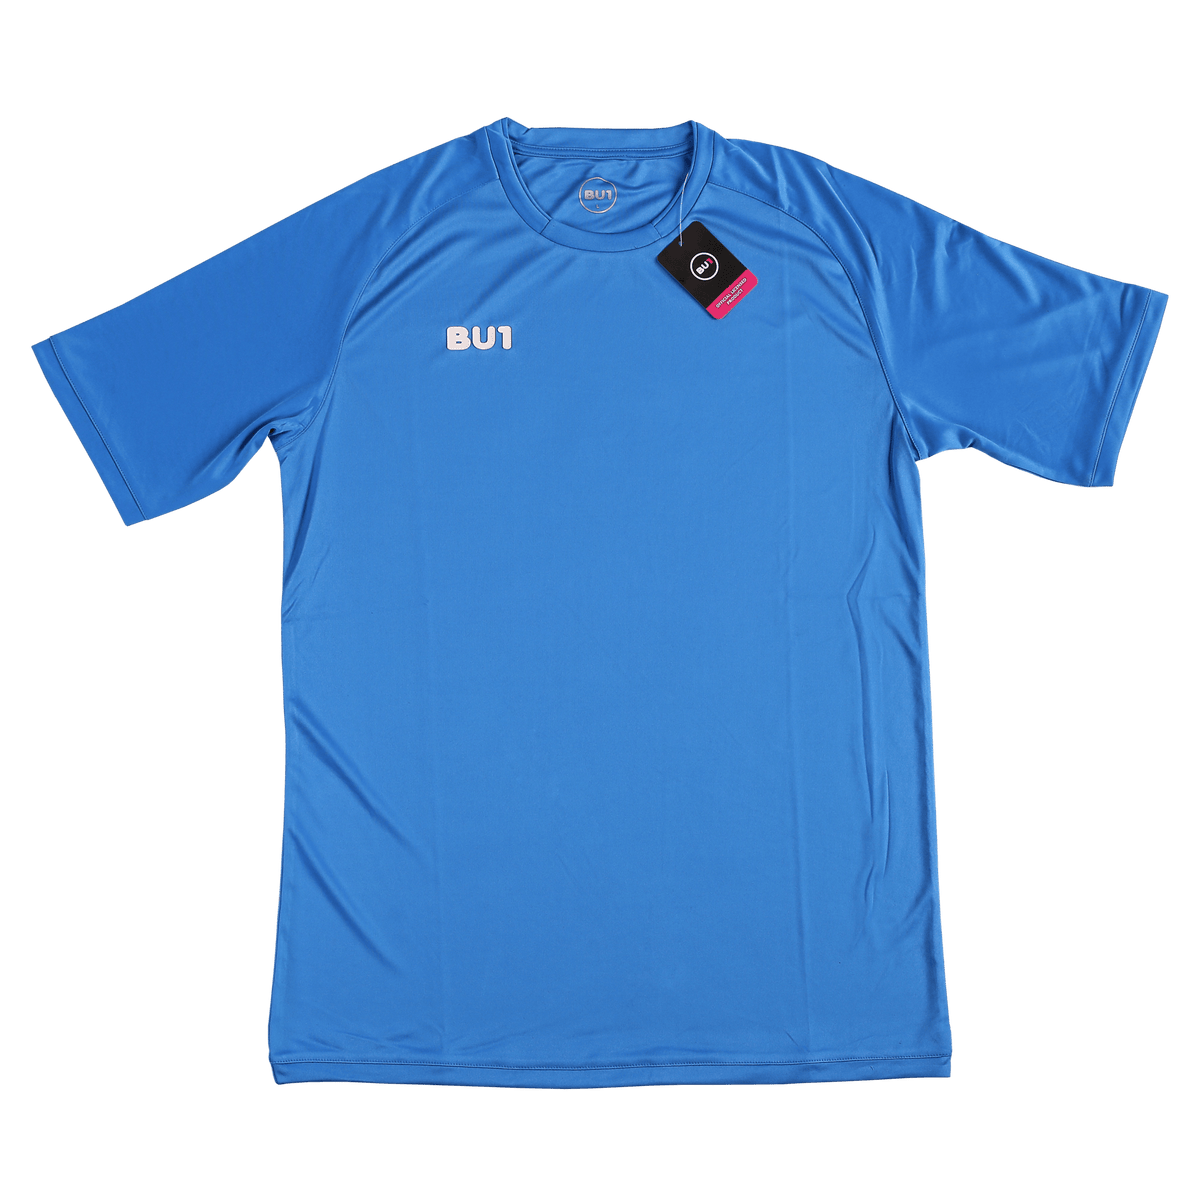 BU1 jersey 20 blue